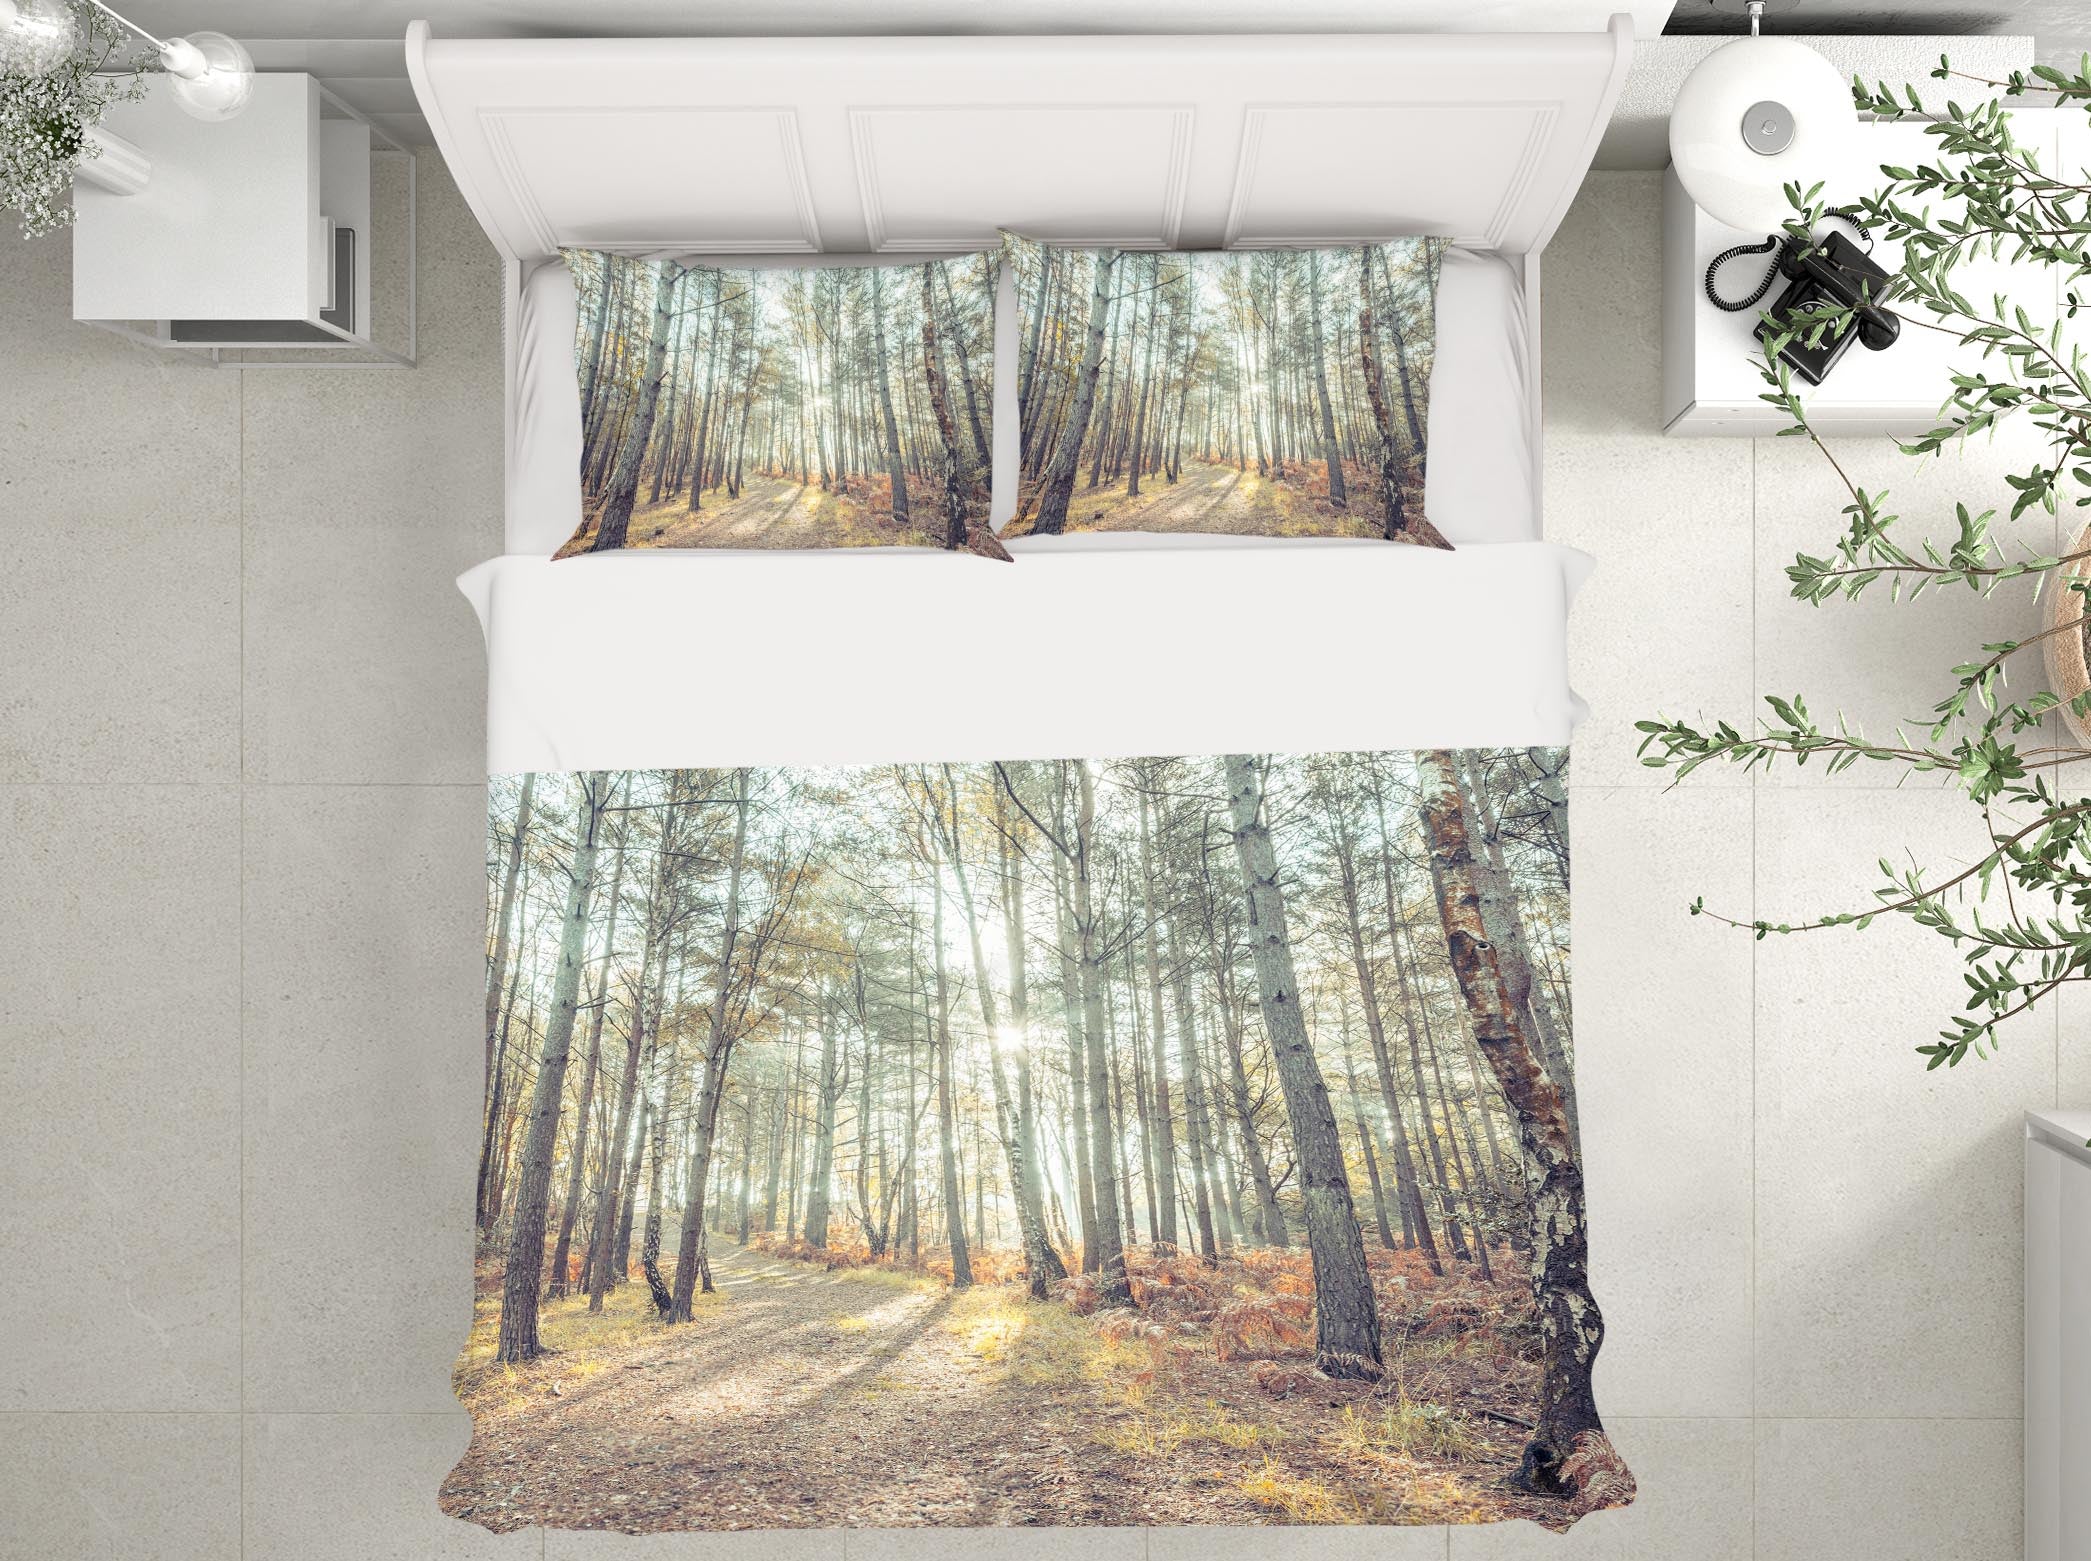 3D Sun Forest 7214 Assaf Frank Bedding Bed Pillowcases Quilt Cover Duvet Cover